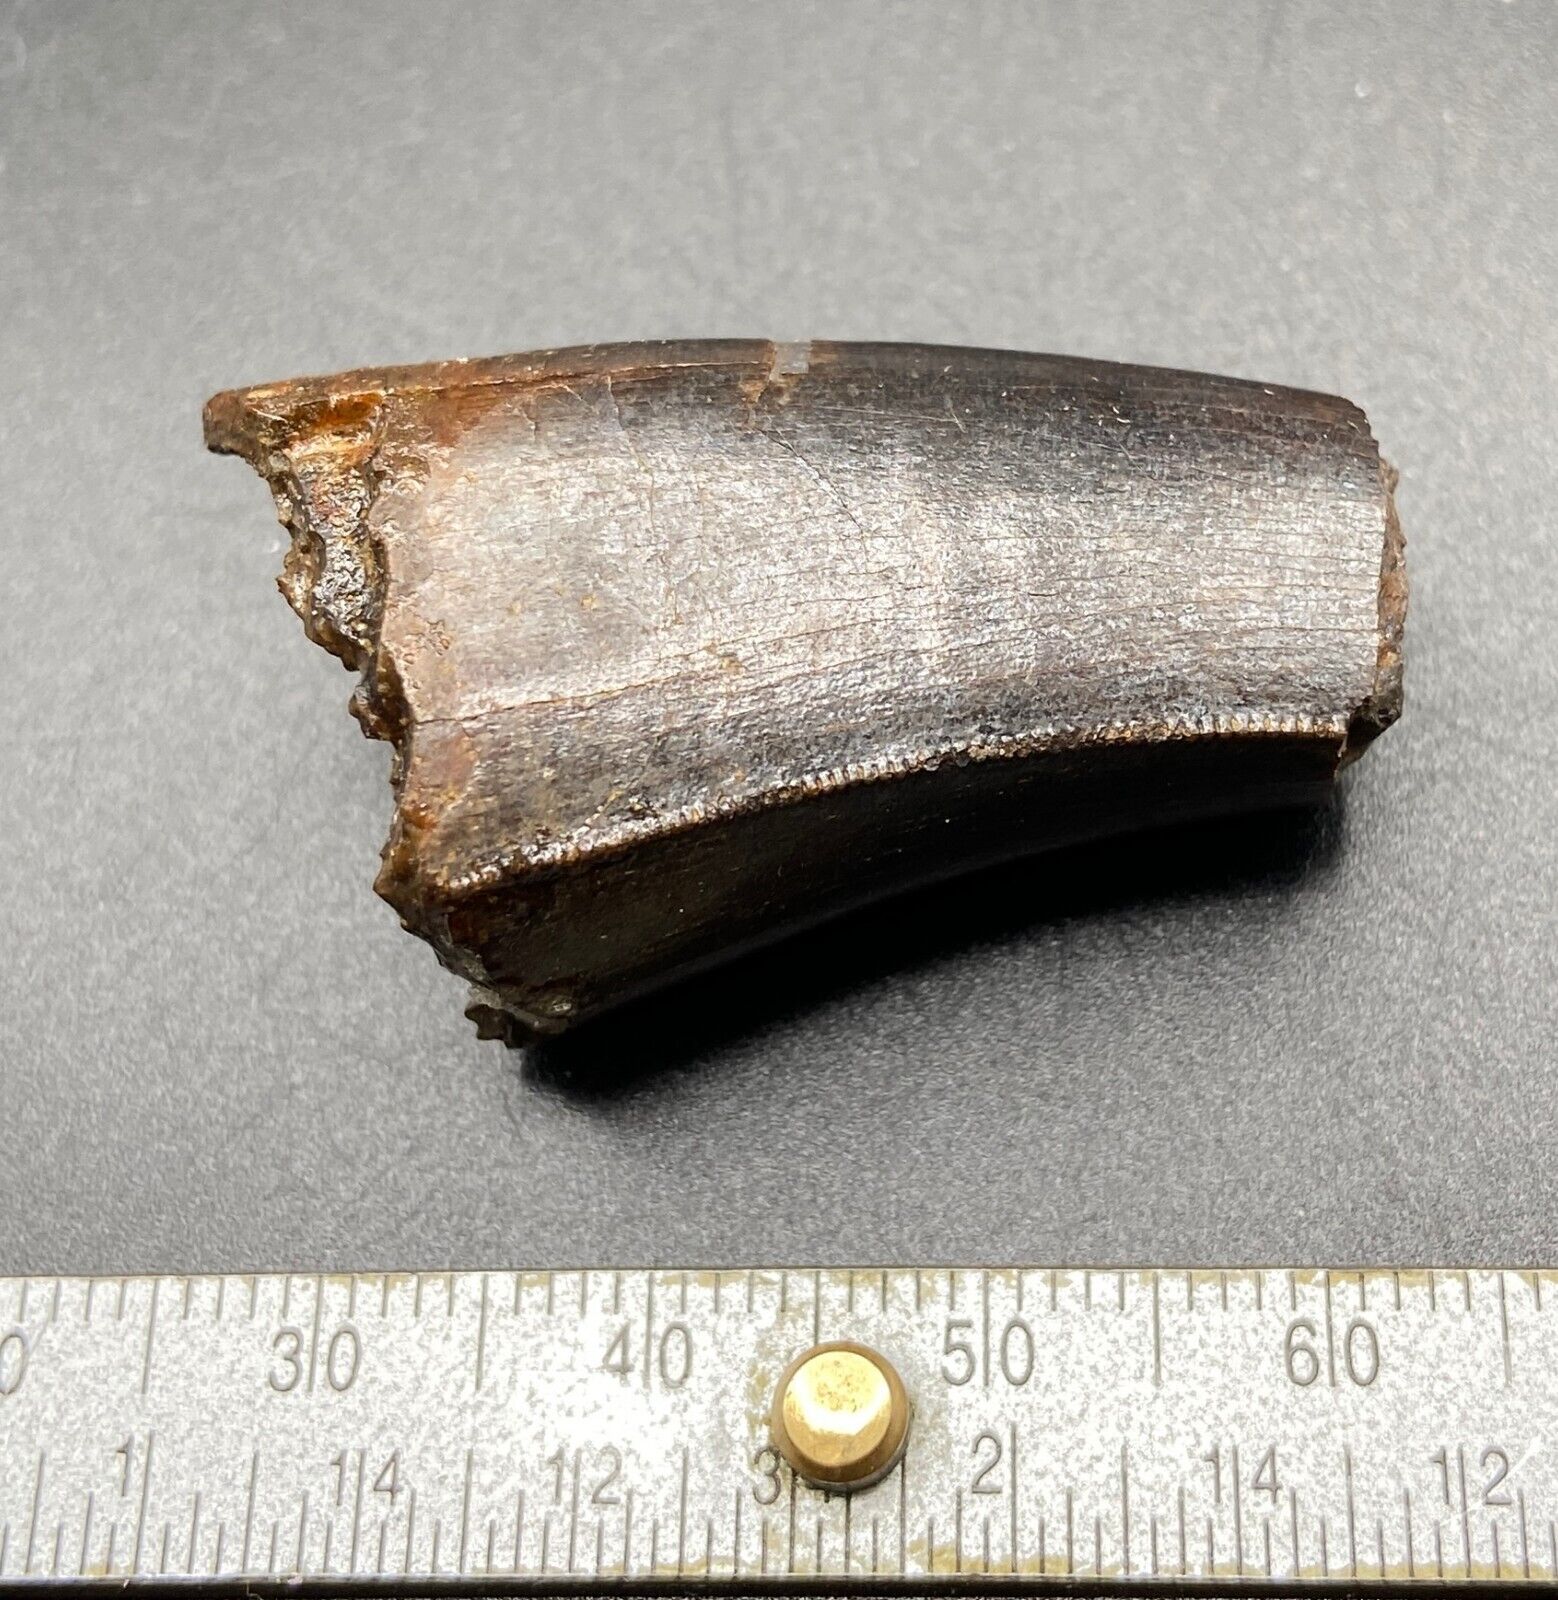 3.0 cm Gorgosaurus tooth fragment with serrations - Judith River fm Montana